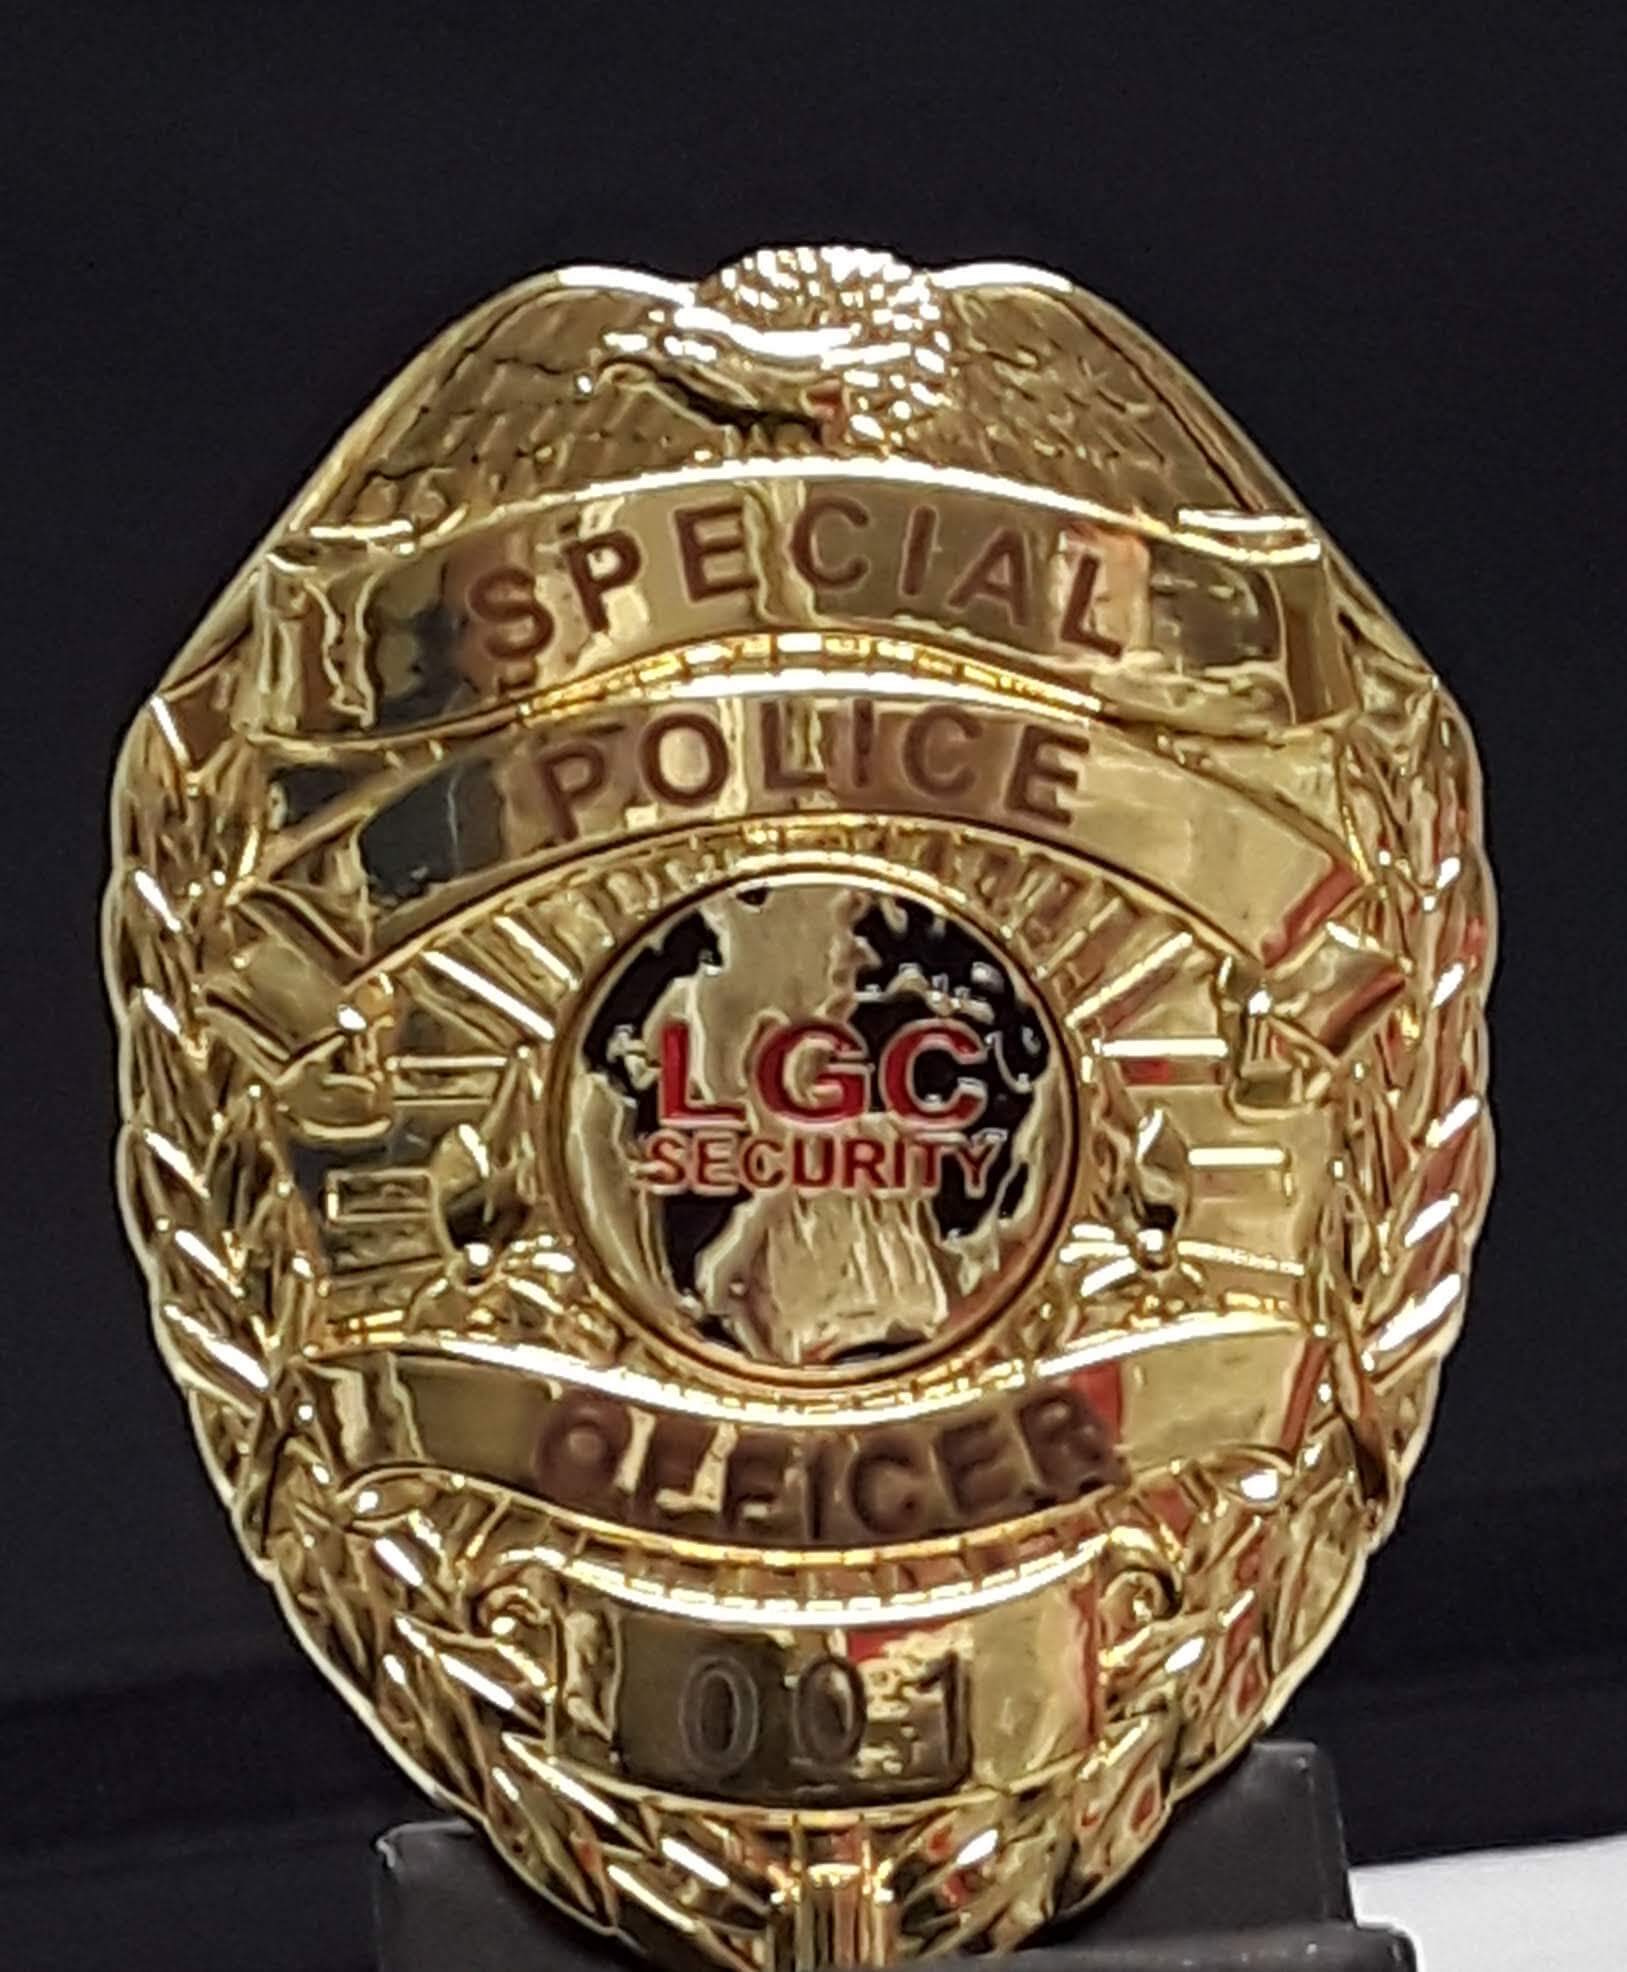 Custom Police Badge Magnet